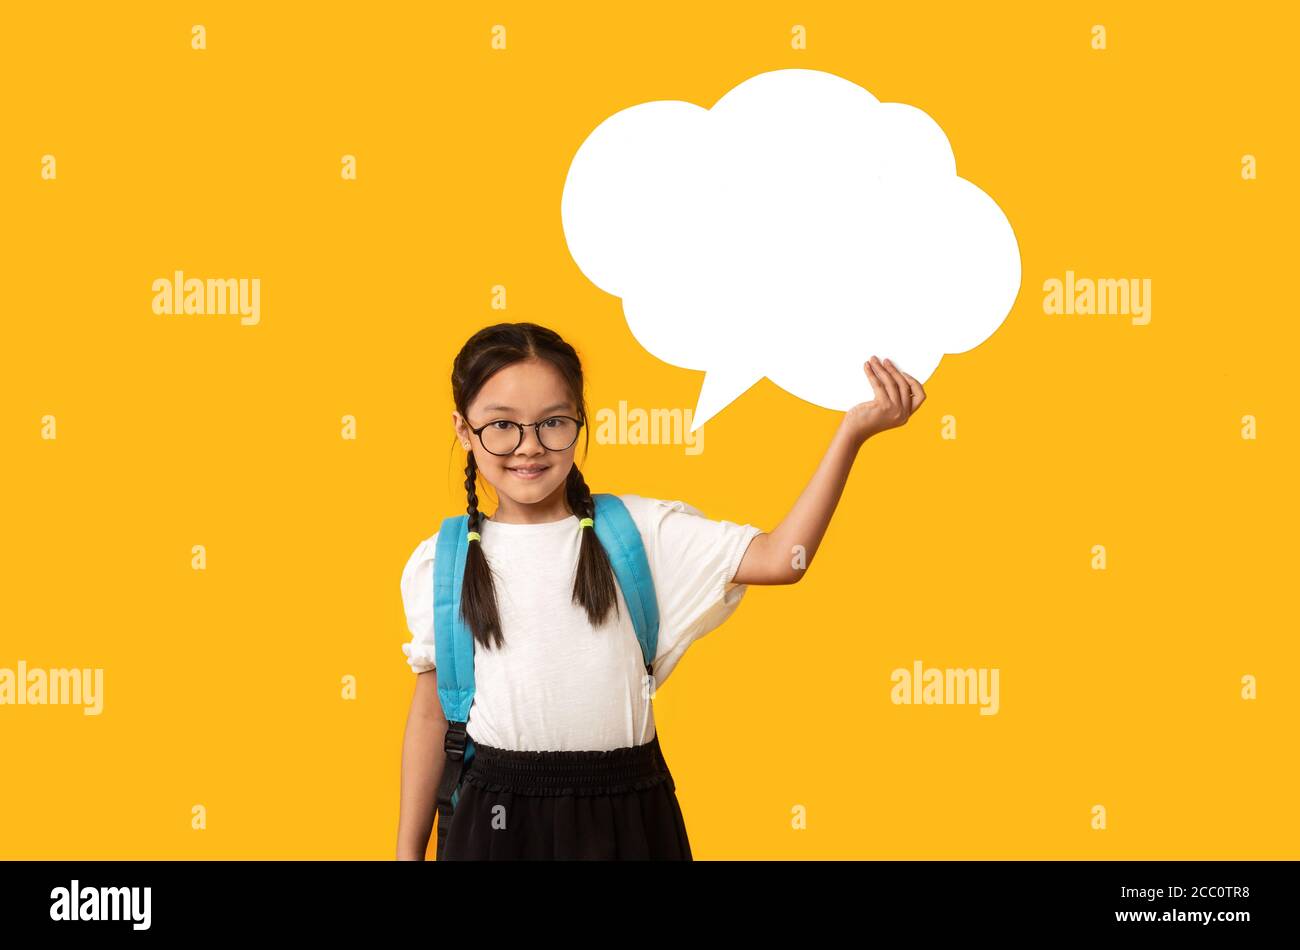 Cheerful Korean Schoolgirl Holding Blank Thought Bubble, Yellow Background, Mockup Stock Photo